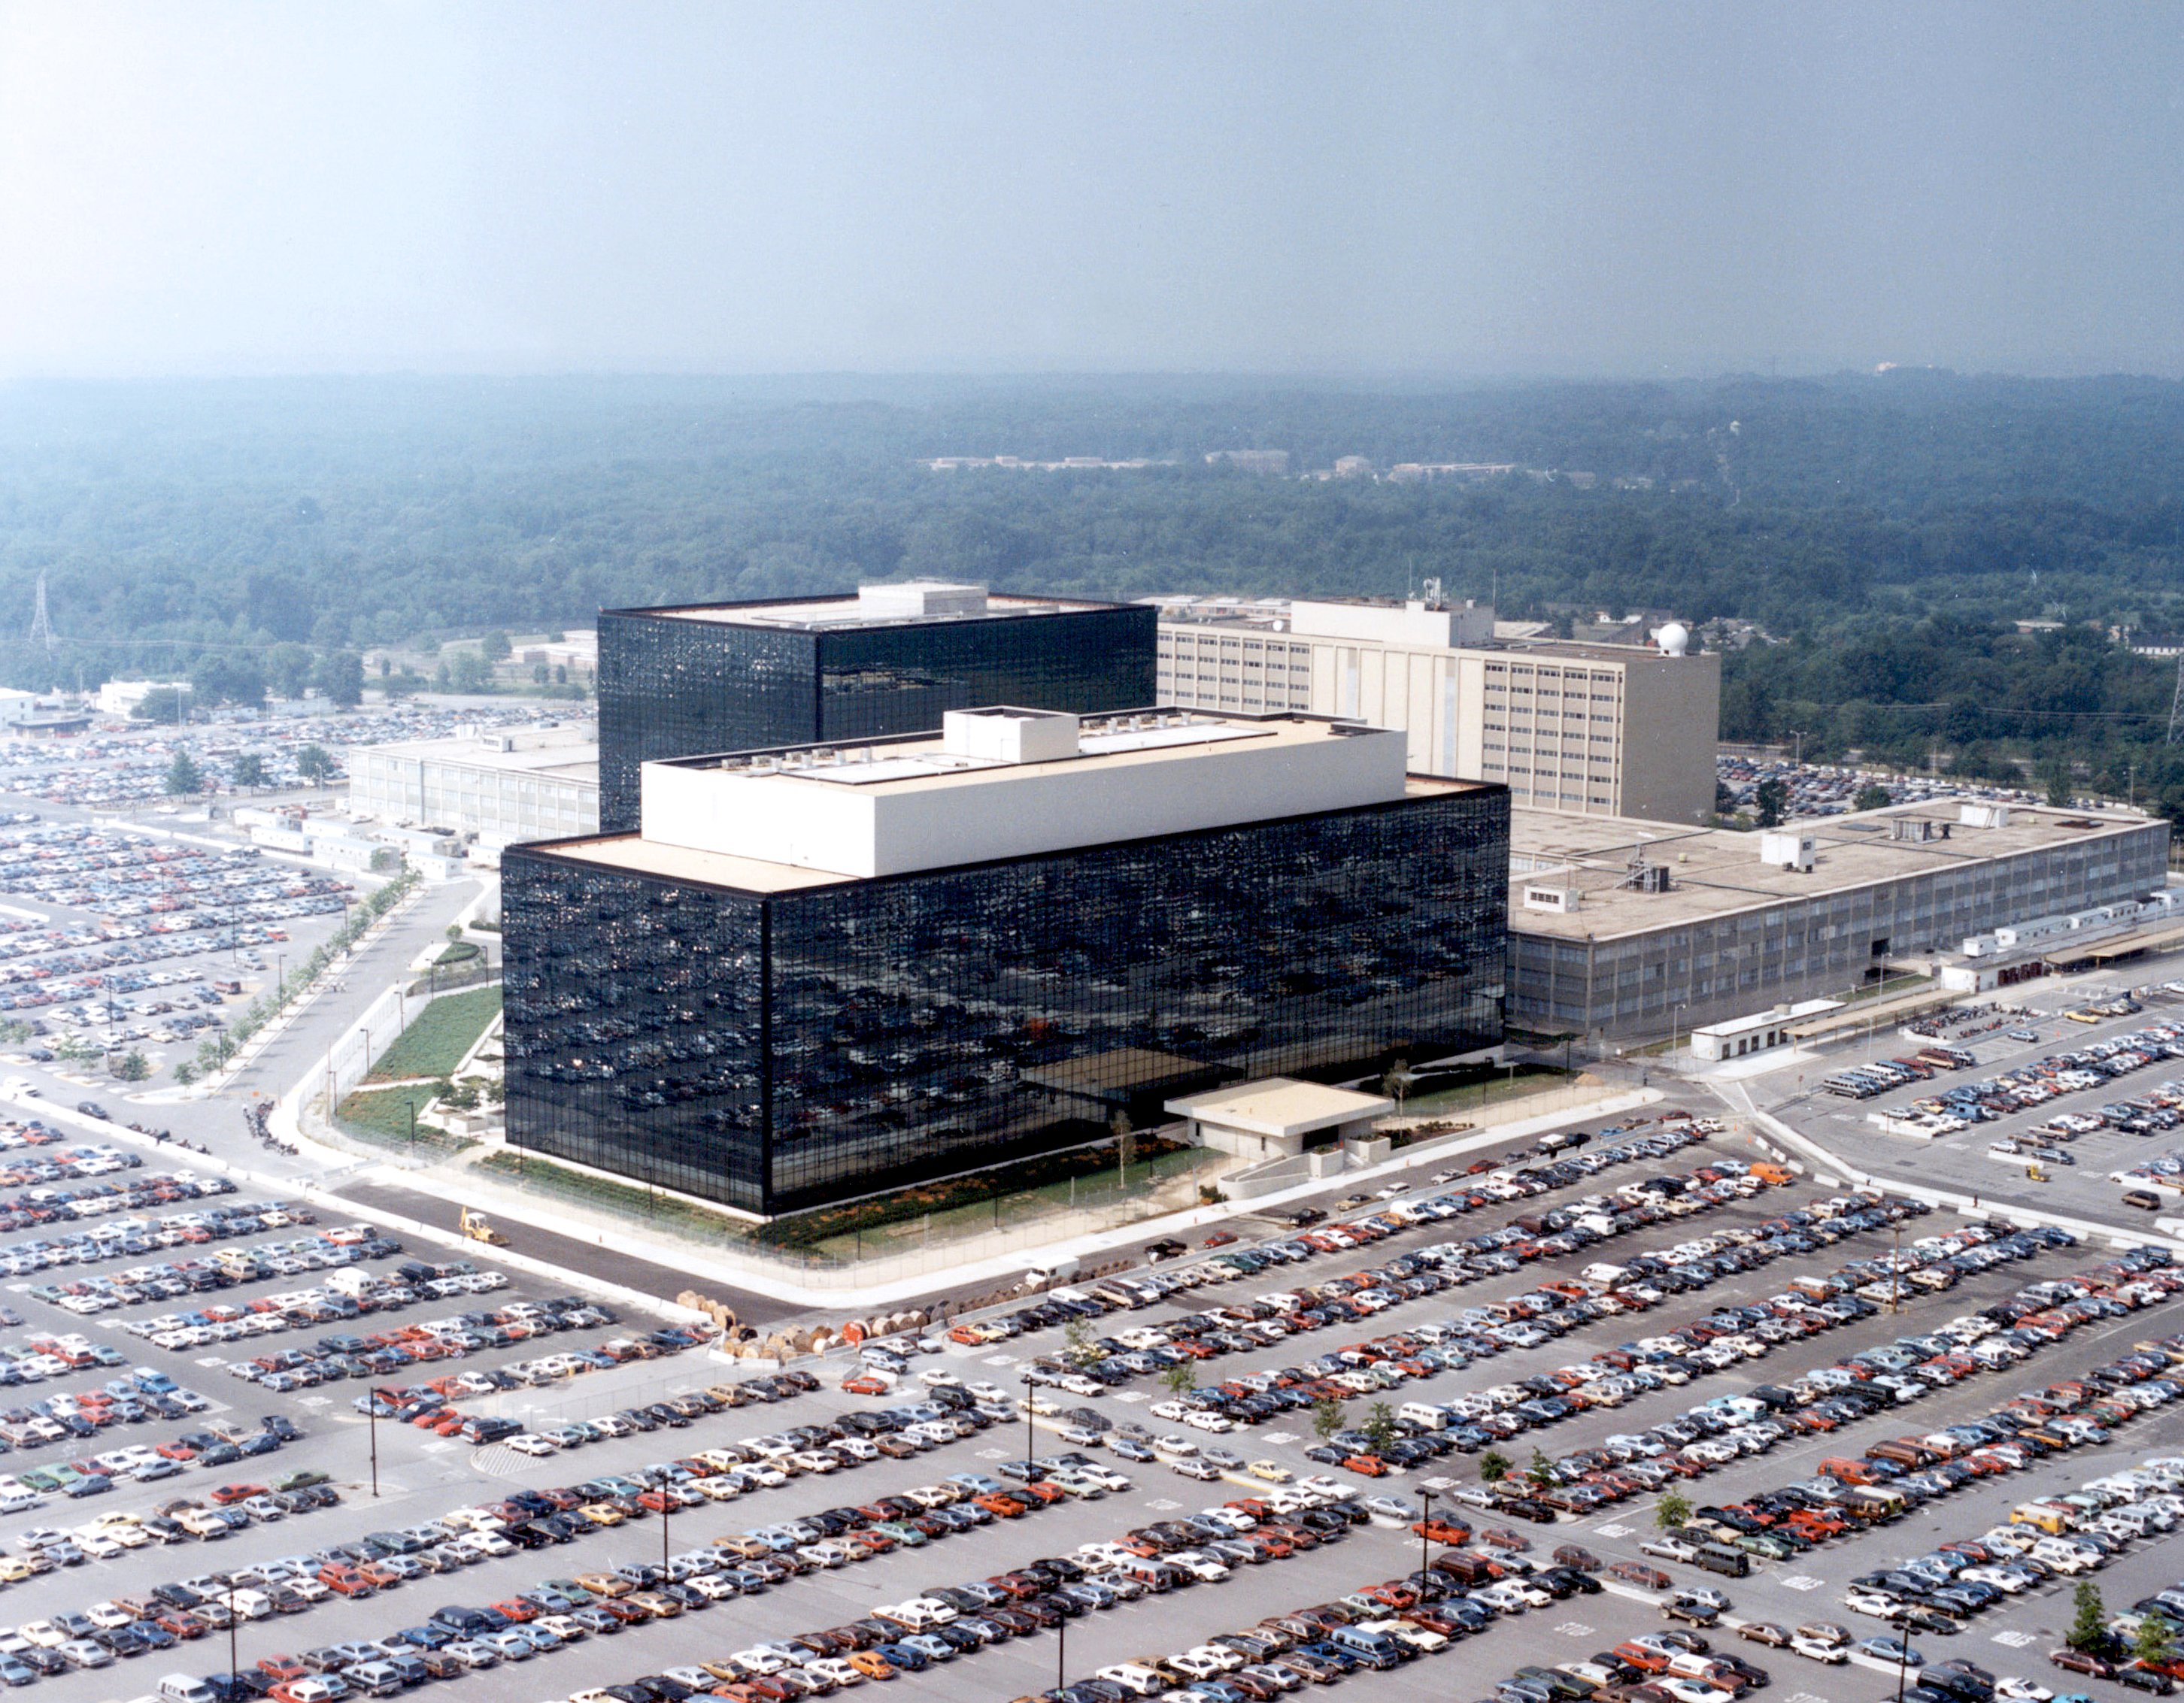 NSA_Ft-Meade_Maryland_USA